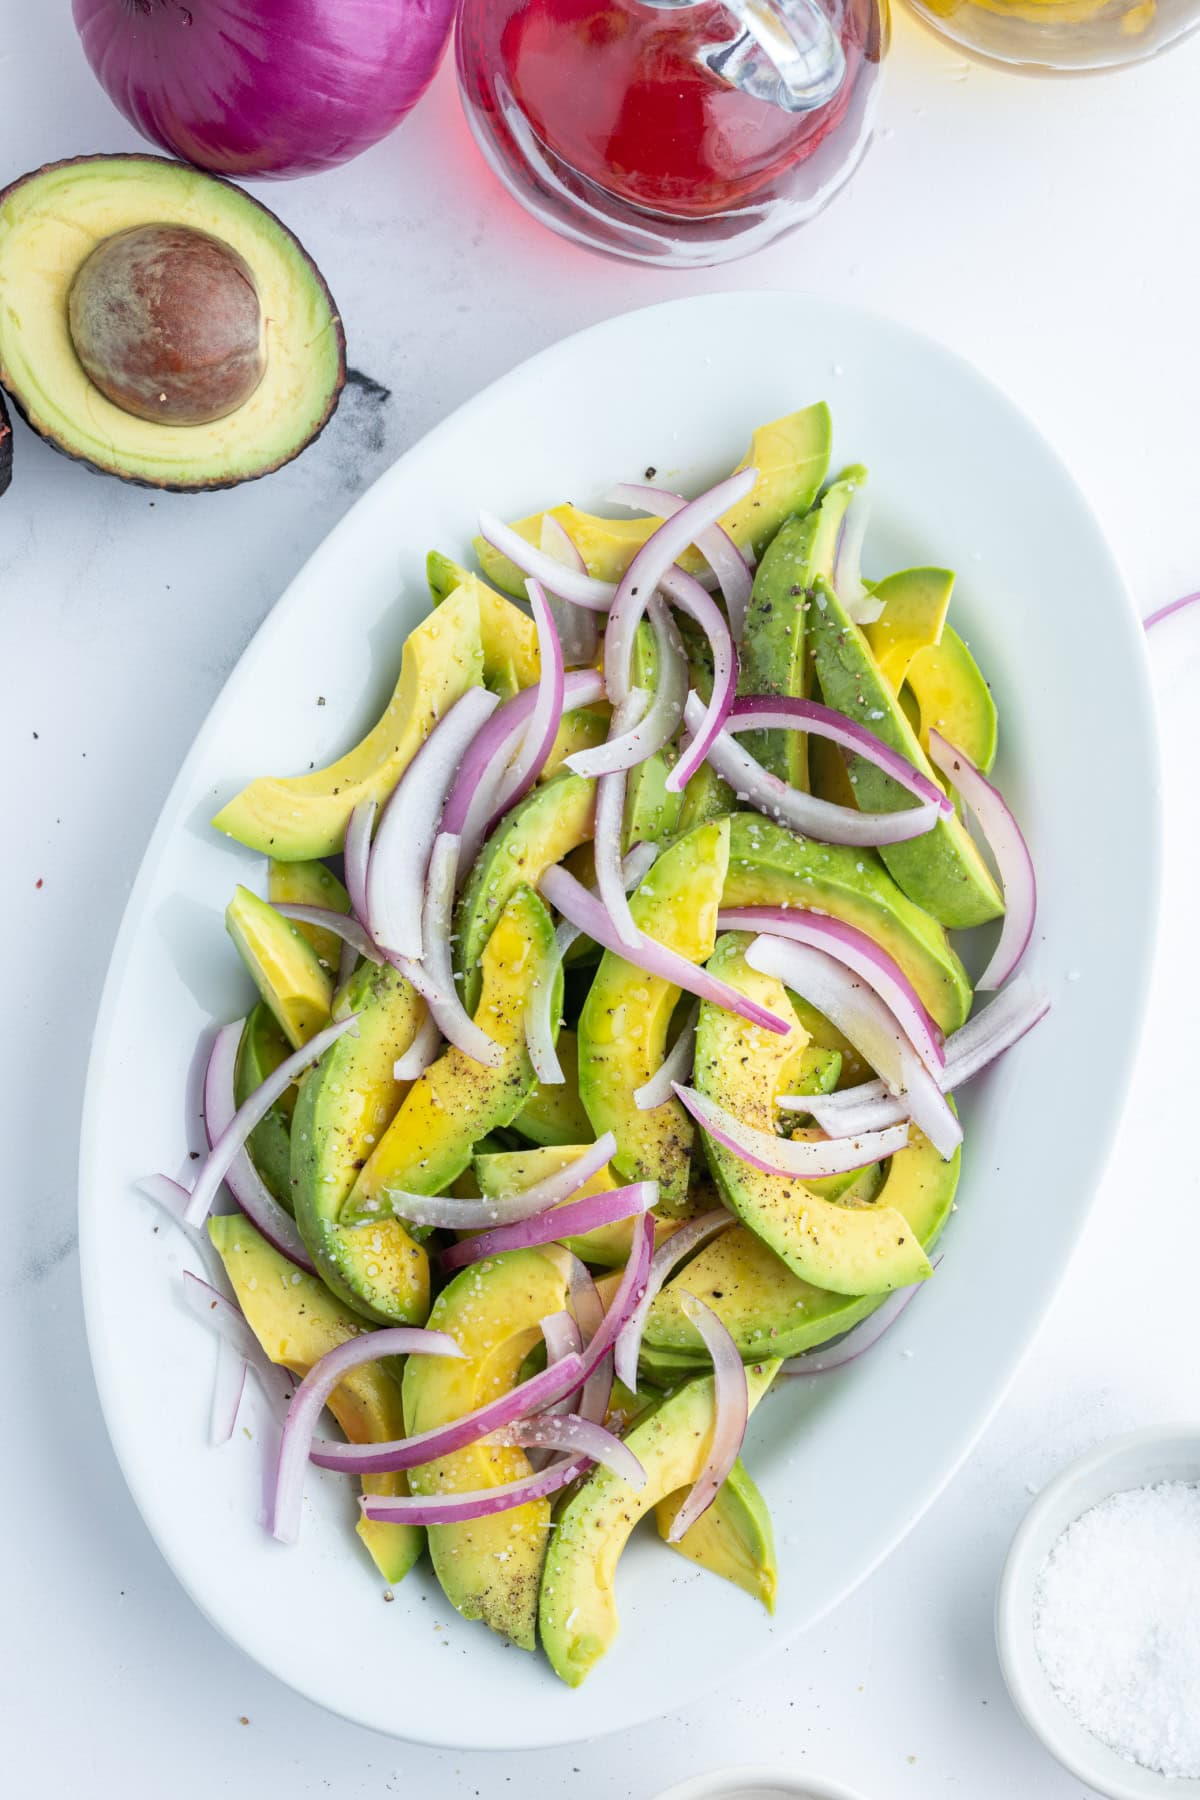 avocado and onion salad on oval platter